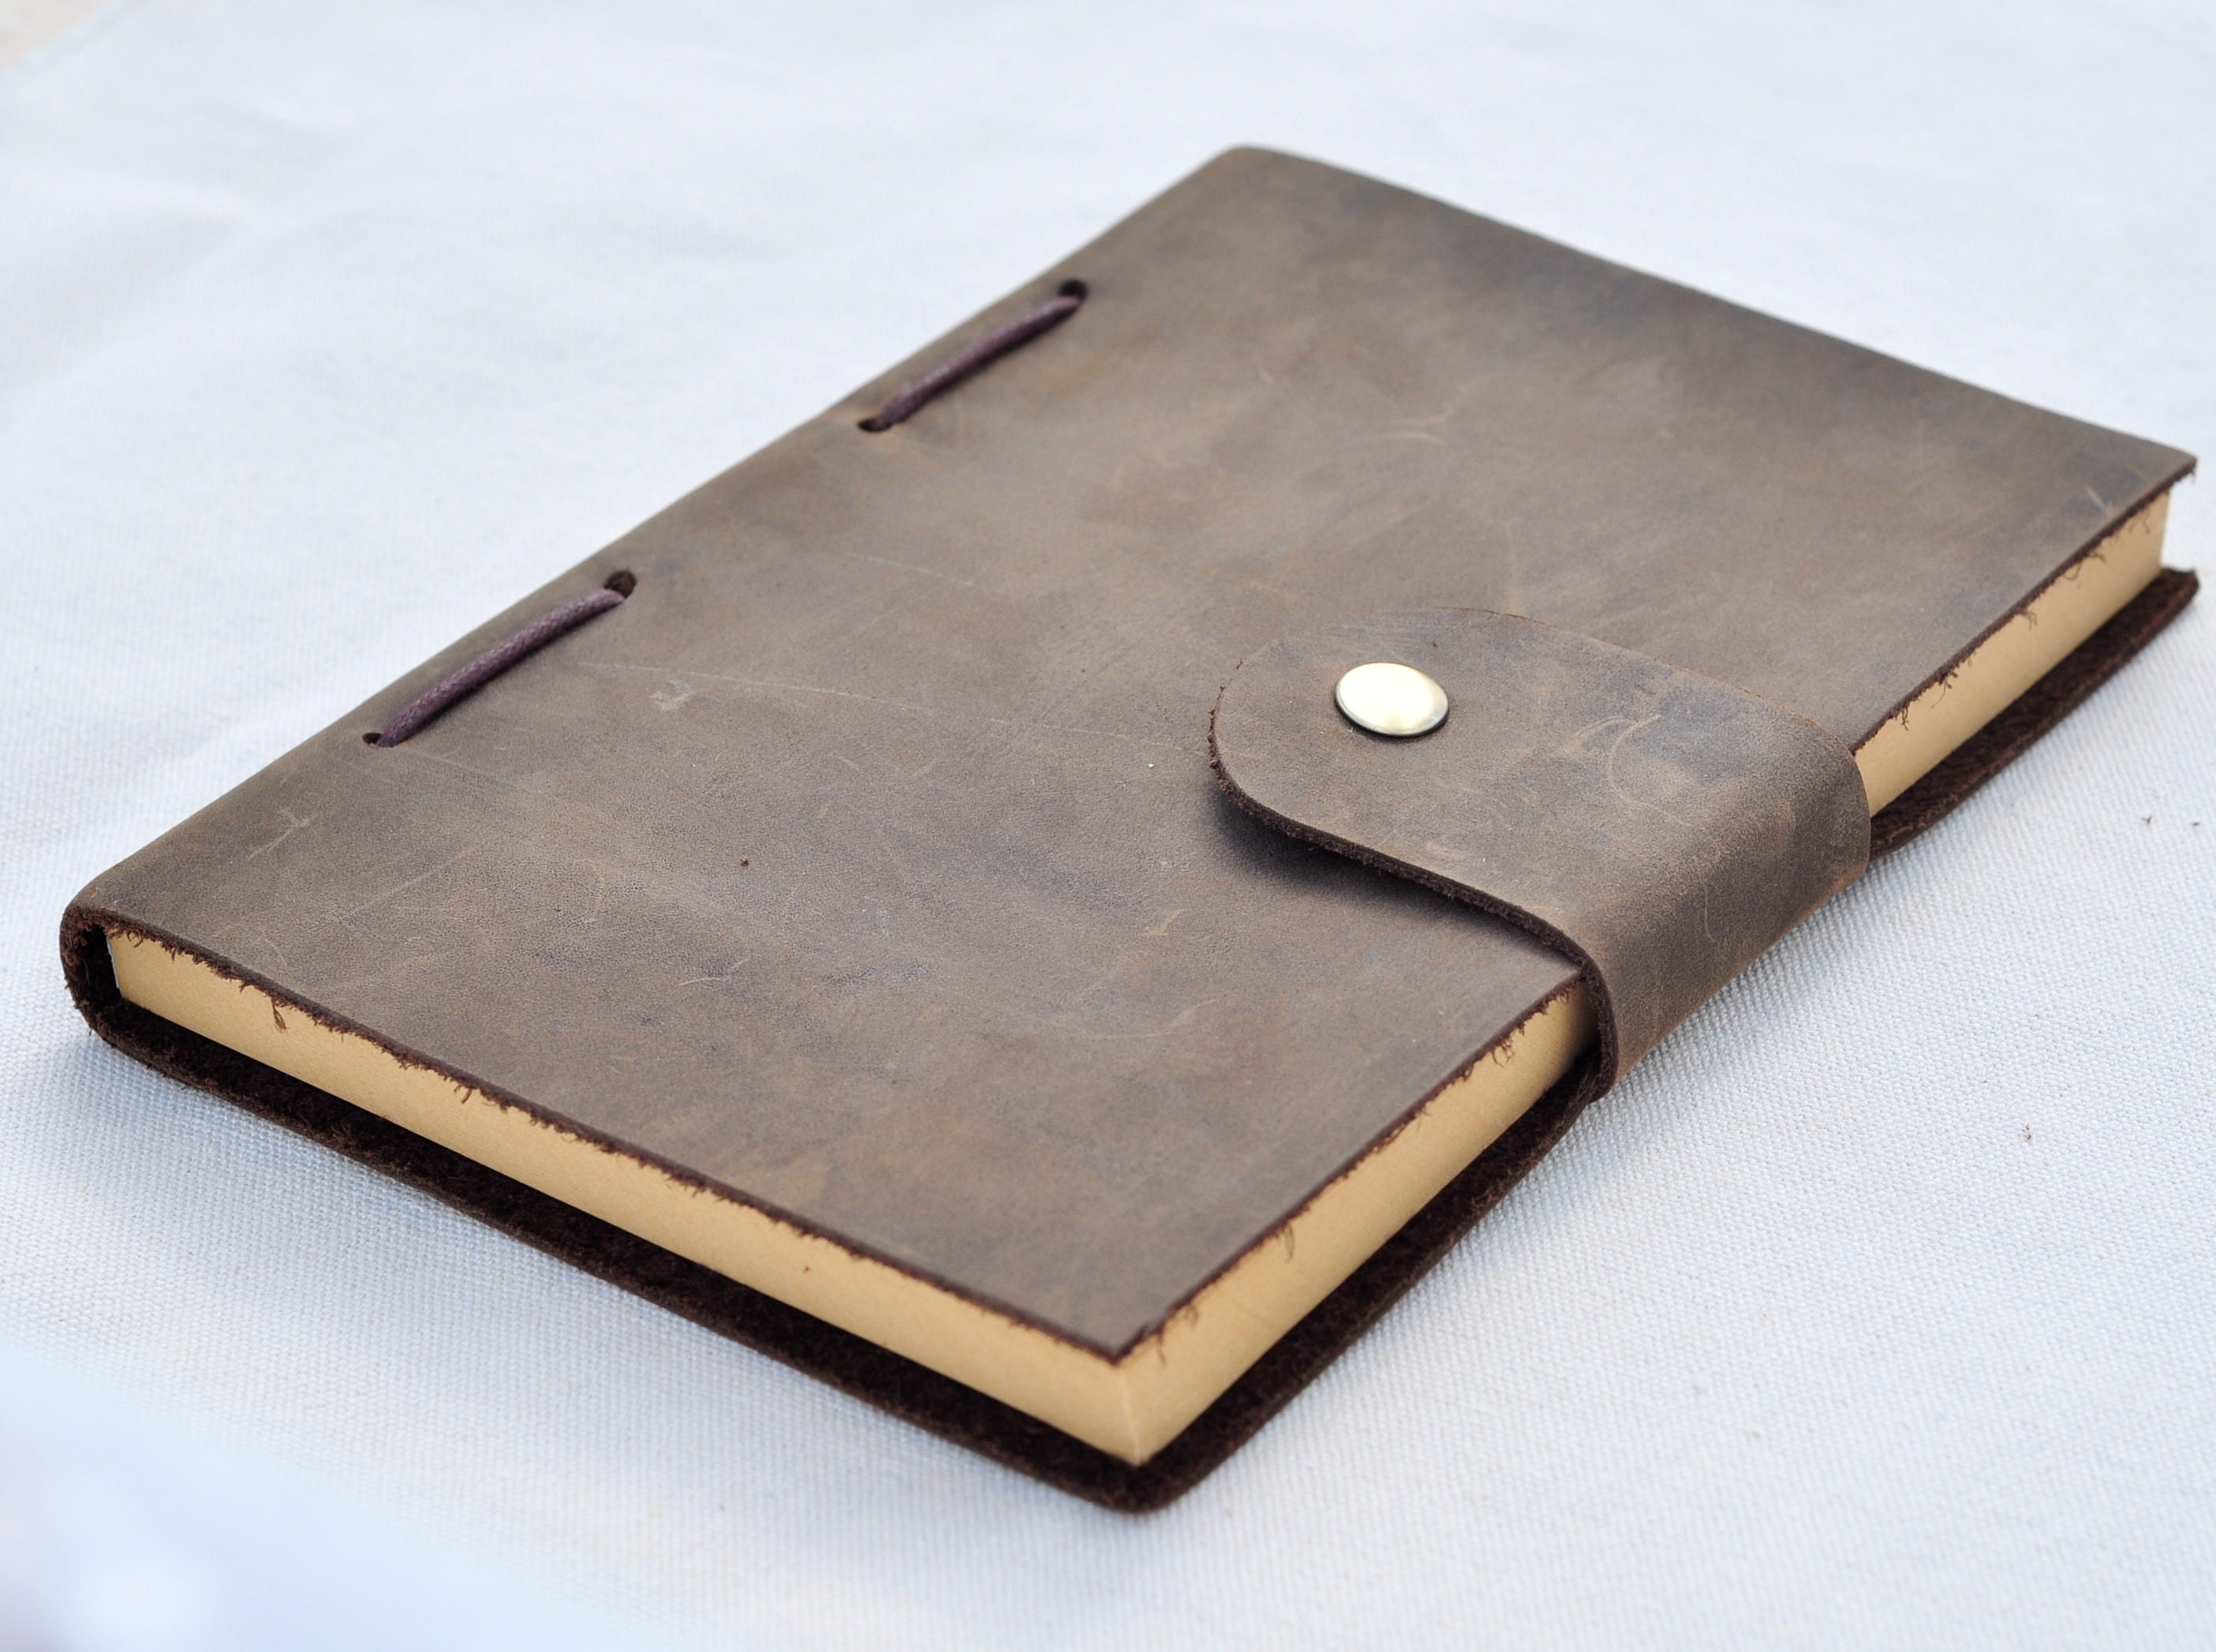 Personalized Leather Sketchbook Diary & Keepsake Box